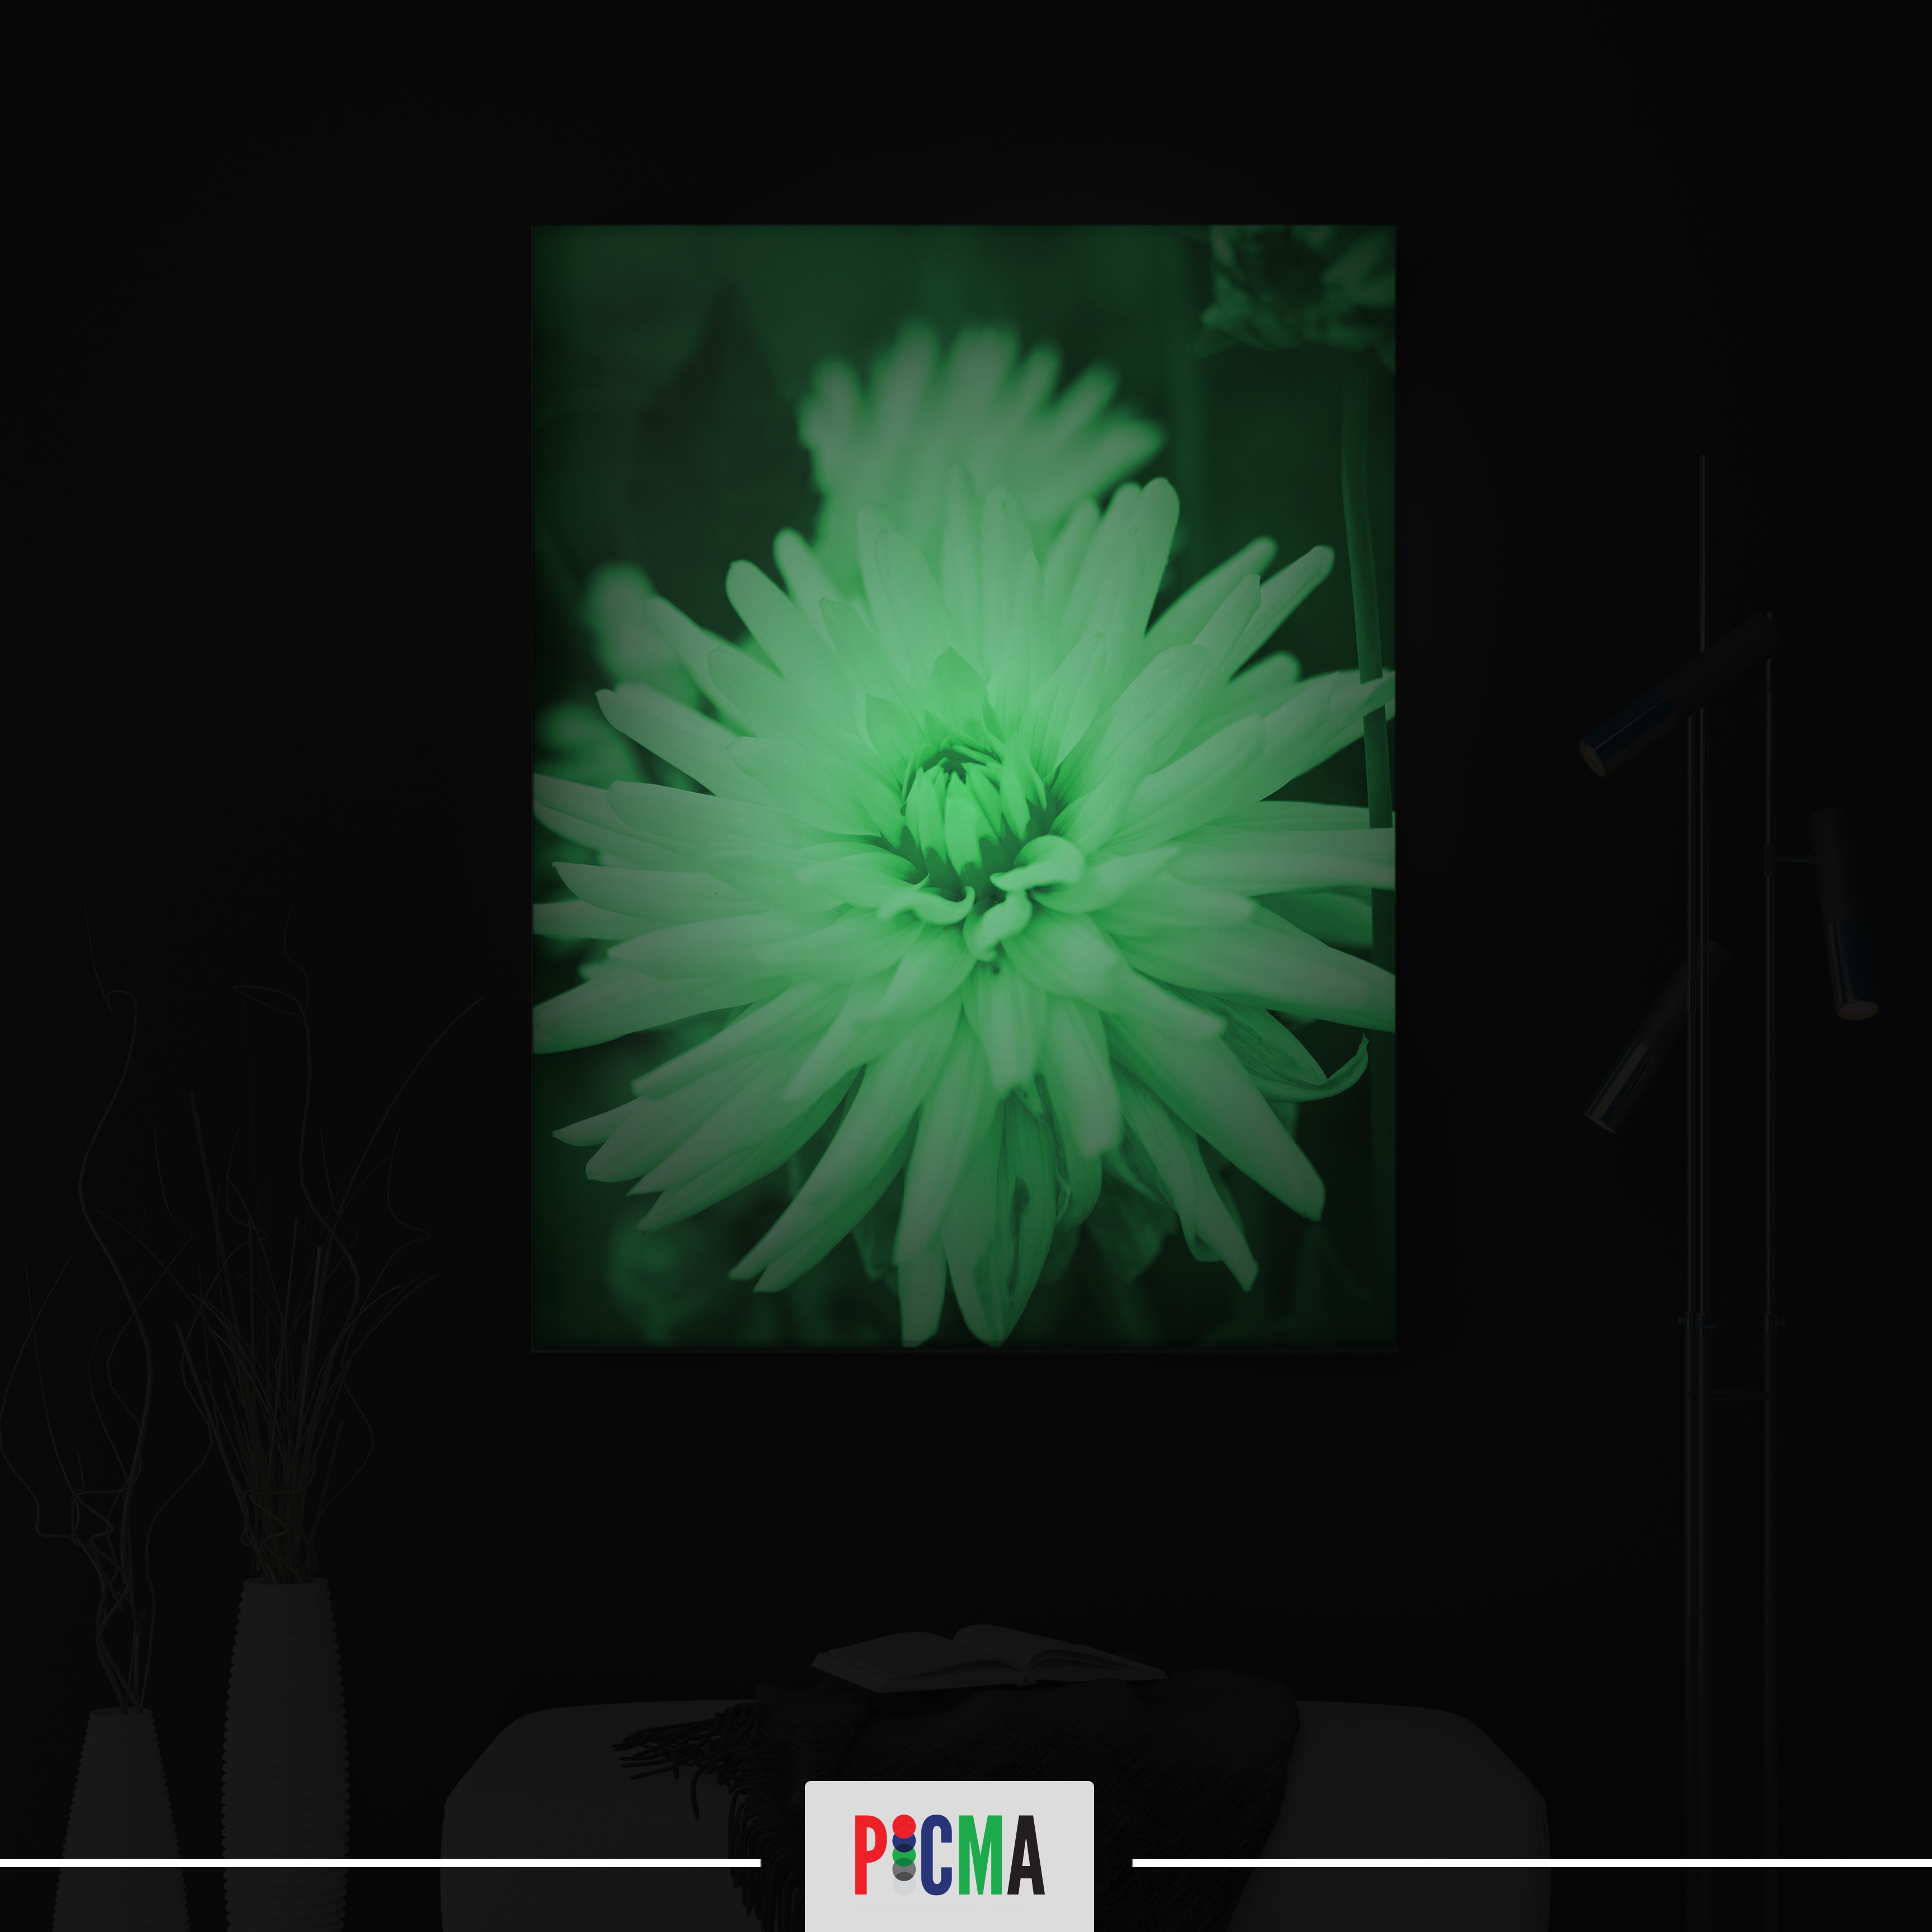 Tablou canvas luminos Floare alba 3, Picma, dualview, panza + sasiu lemn, 80 x 120 cm